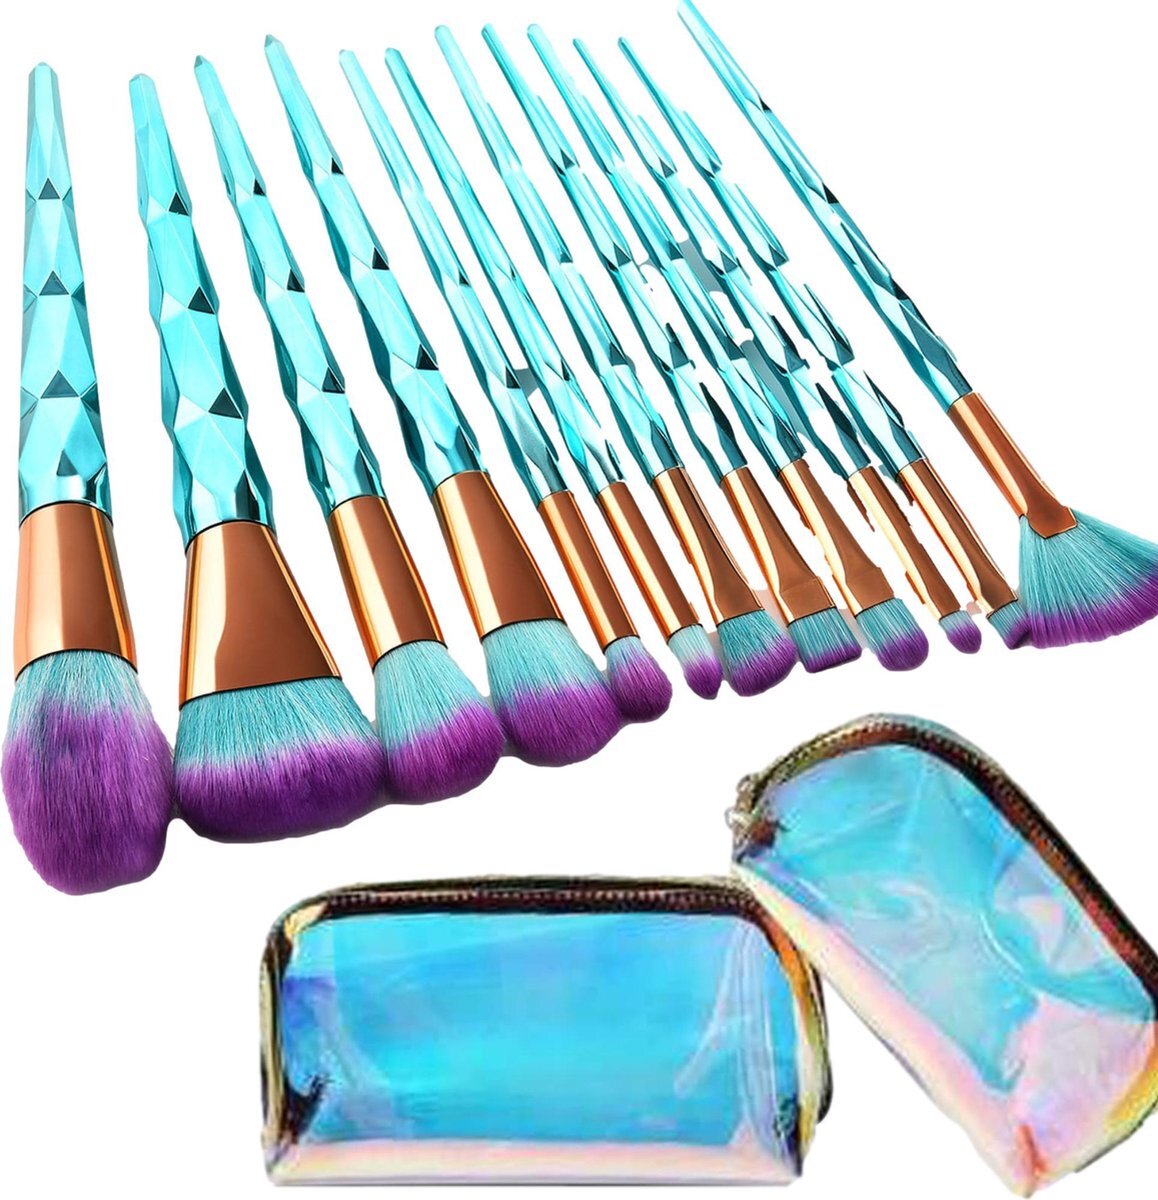 BeauRose Make Up Kwasten Set - Blauwe Make Up Brush - Oogschaduw - Foundation Kwast - Poeder Kwast - Brush - Make up - Cosmetica - Kwasten Set – Make Up Tasje - 12 Stuks